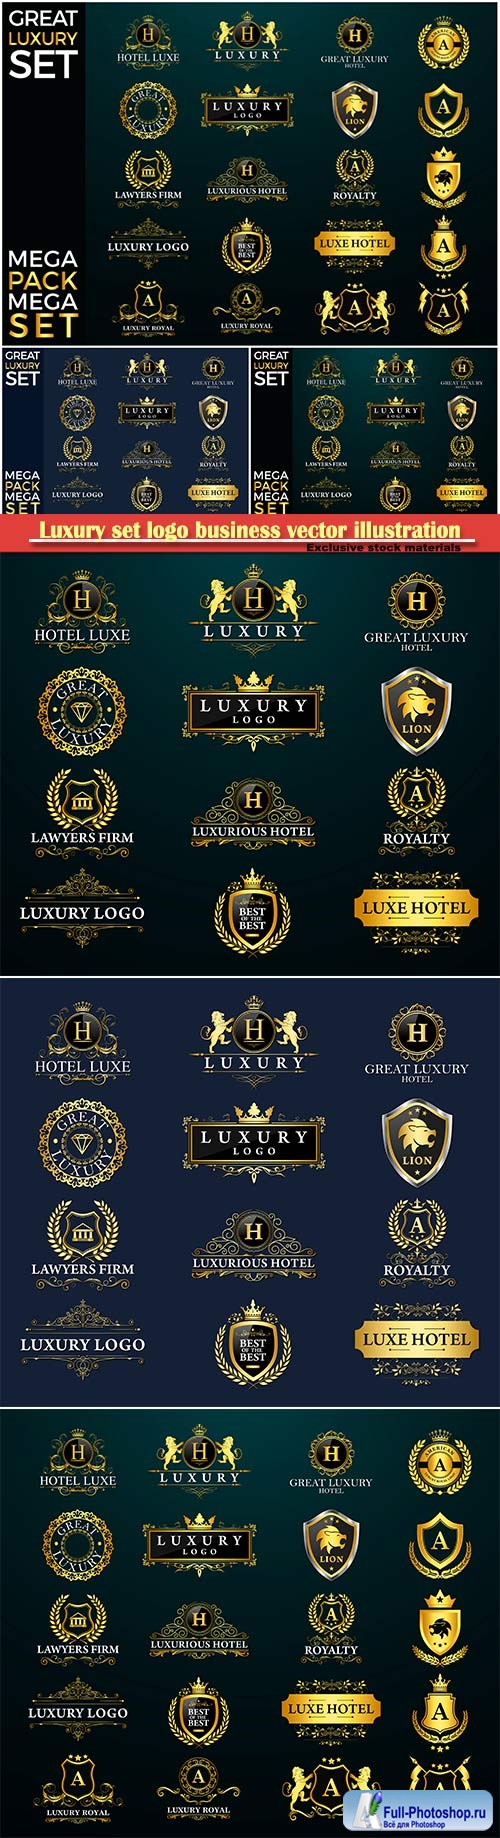 Luxury set logo business vector illustration template